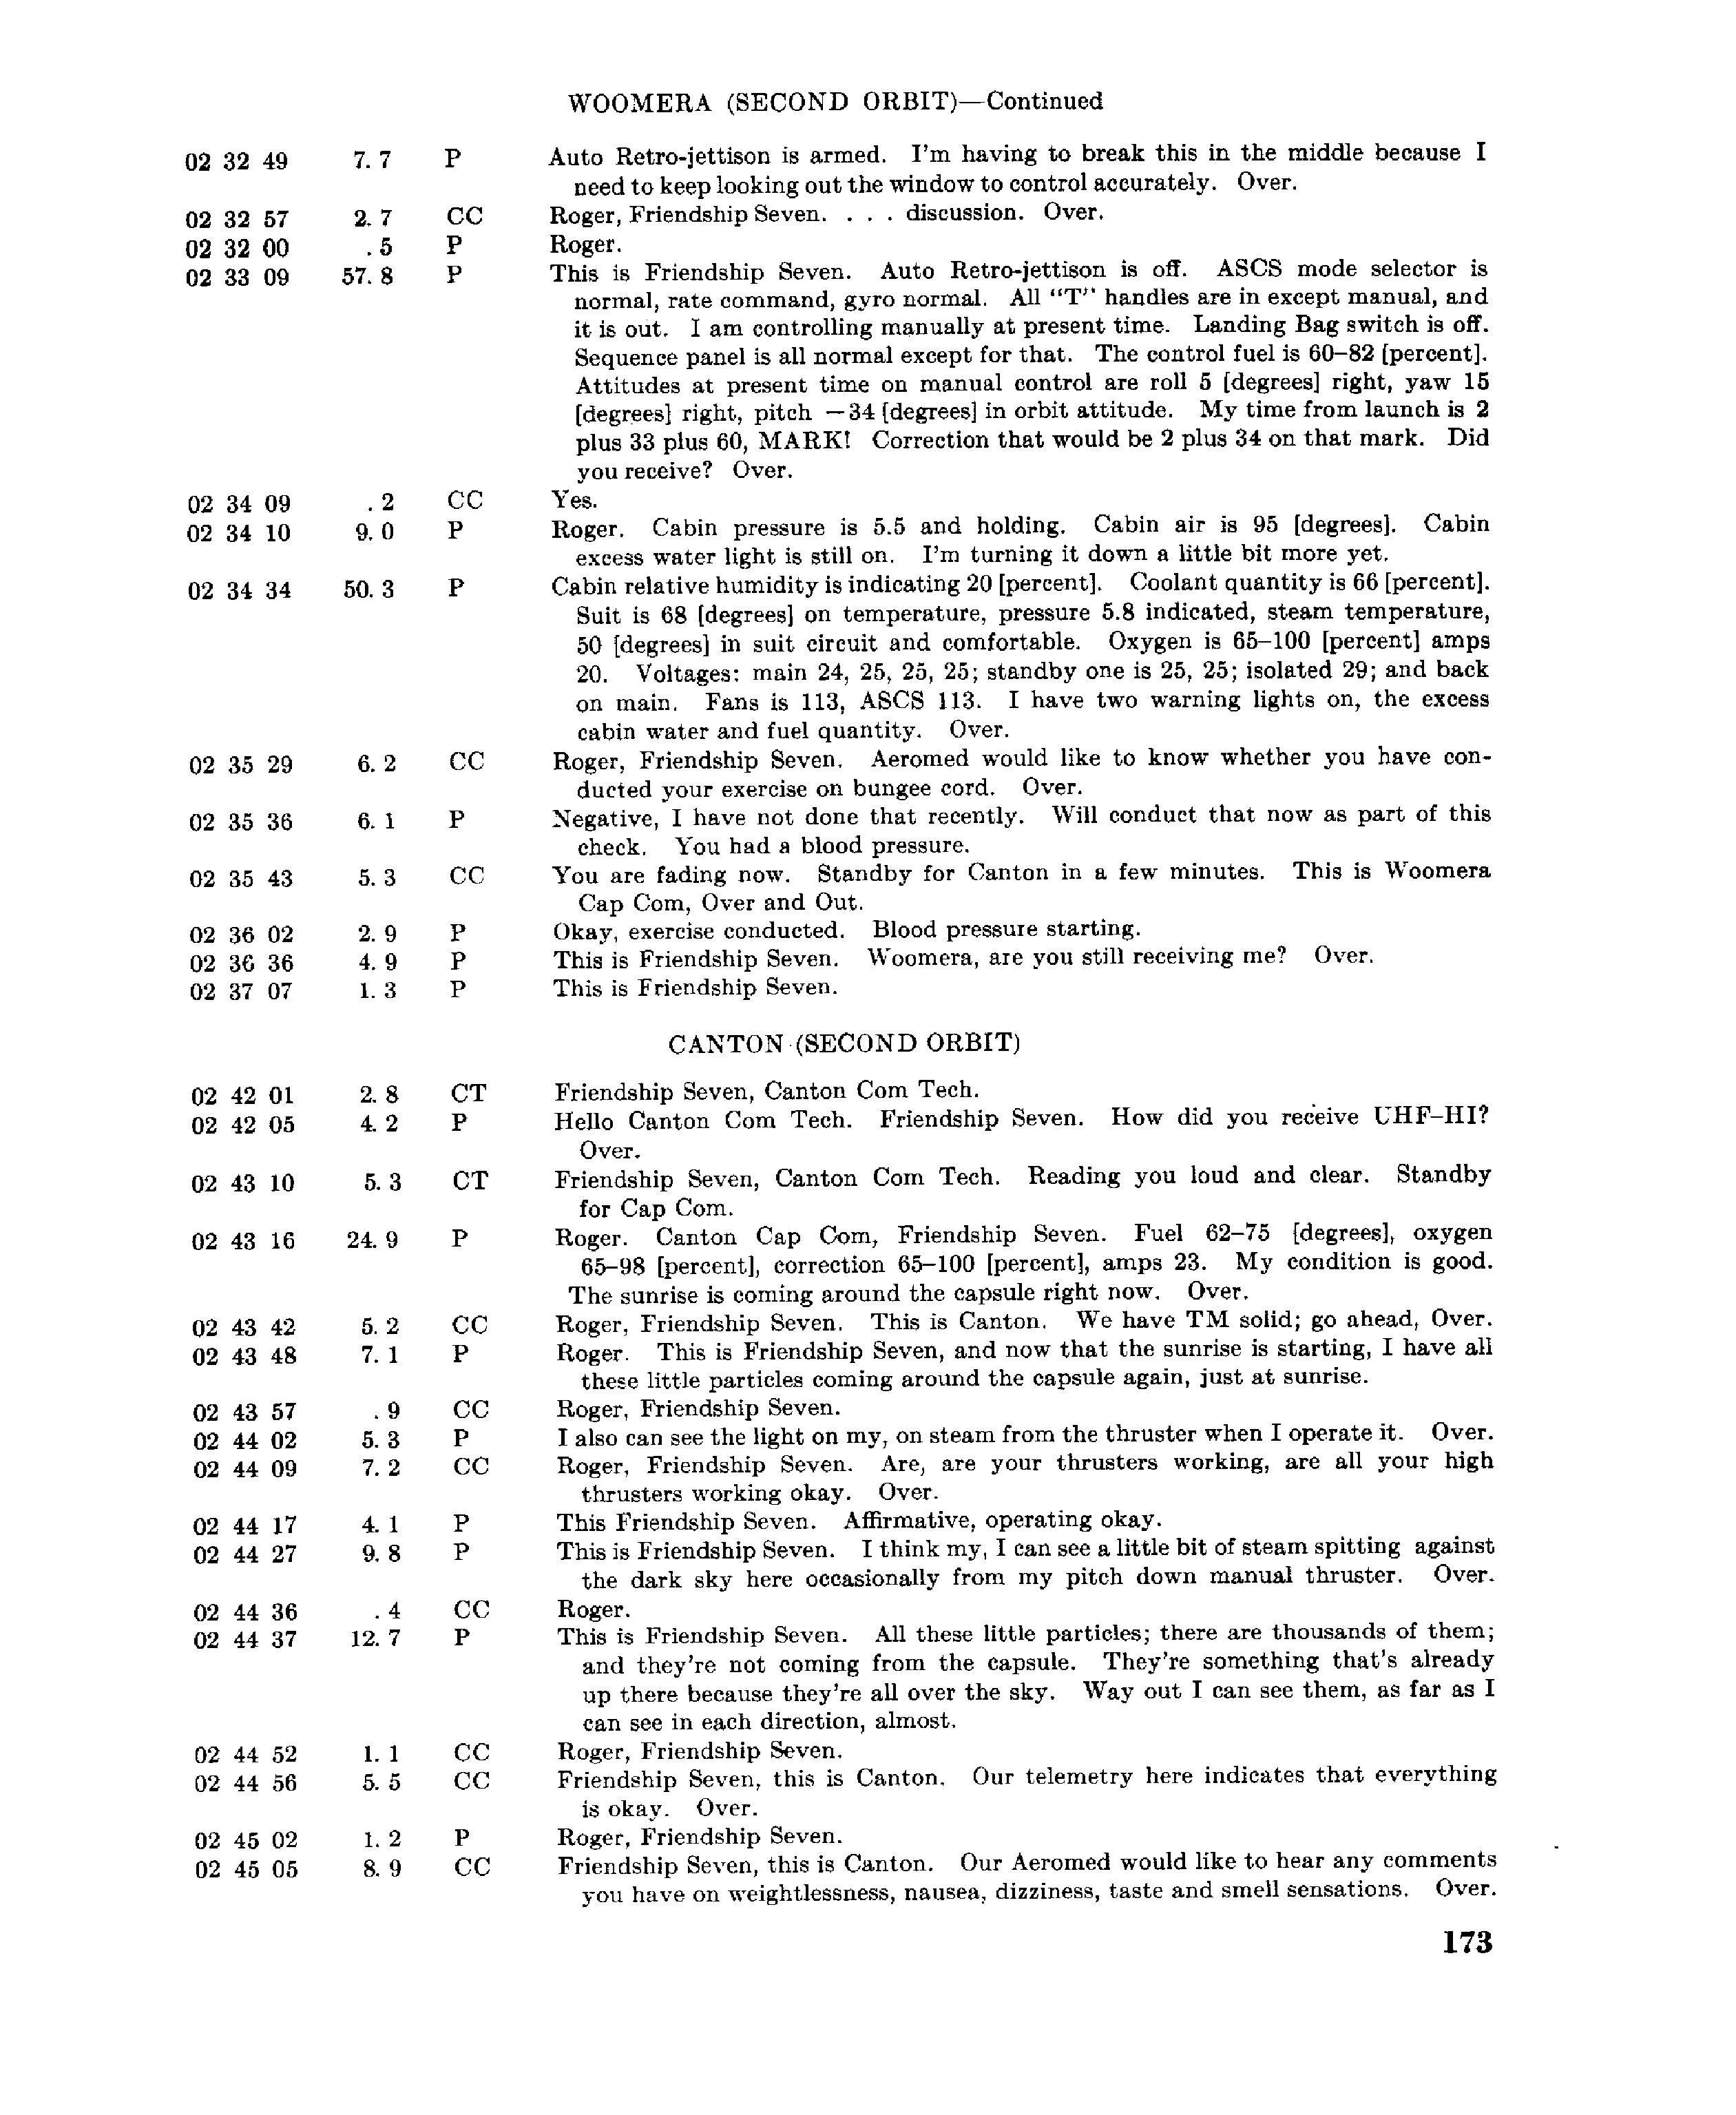 Page 172 of Mercury 6’s original transcript